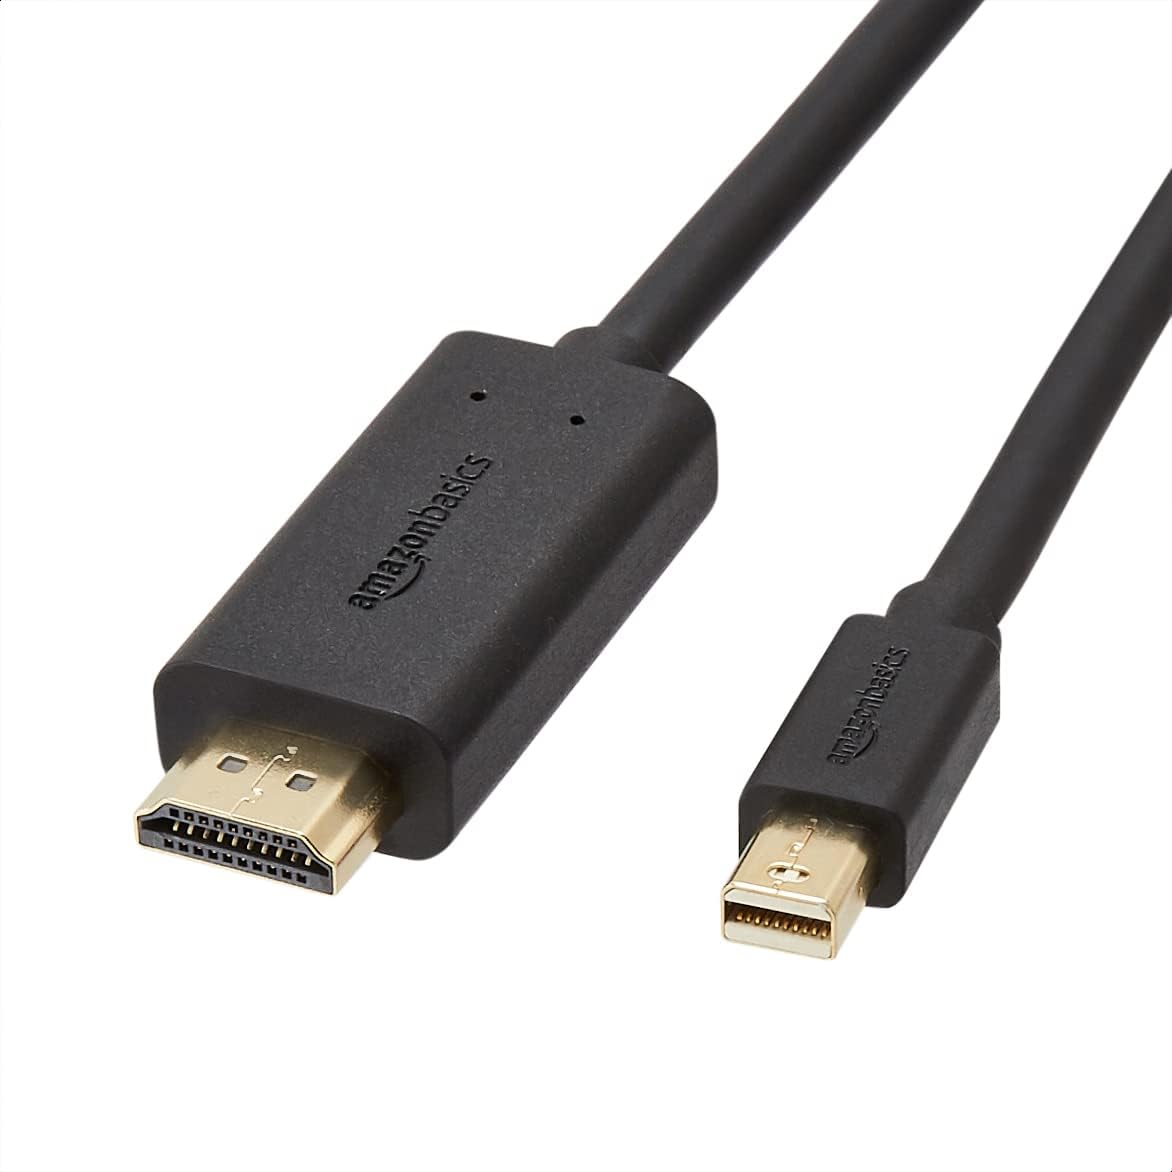 Amazon Basics Mini DisplayPort to HDMI Cable, 3 Feet, Black